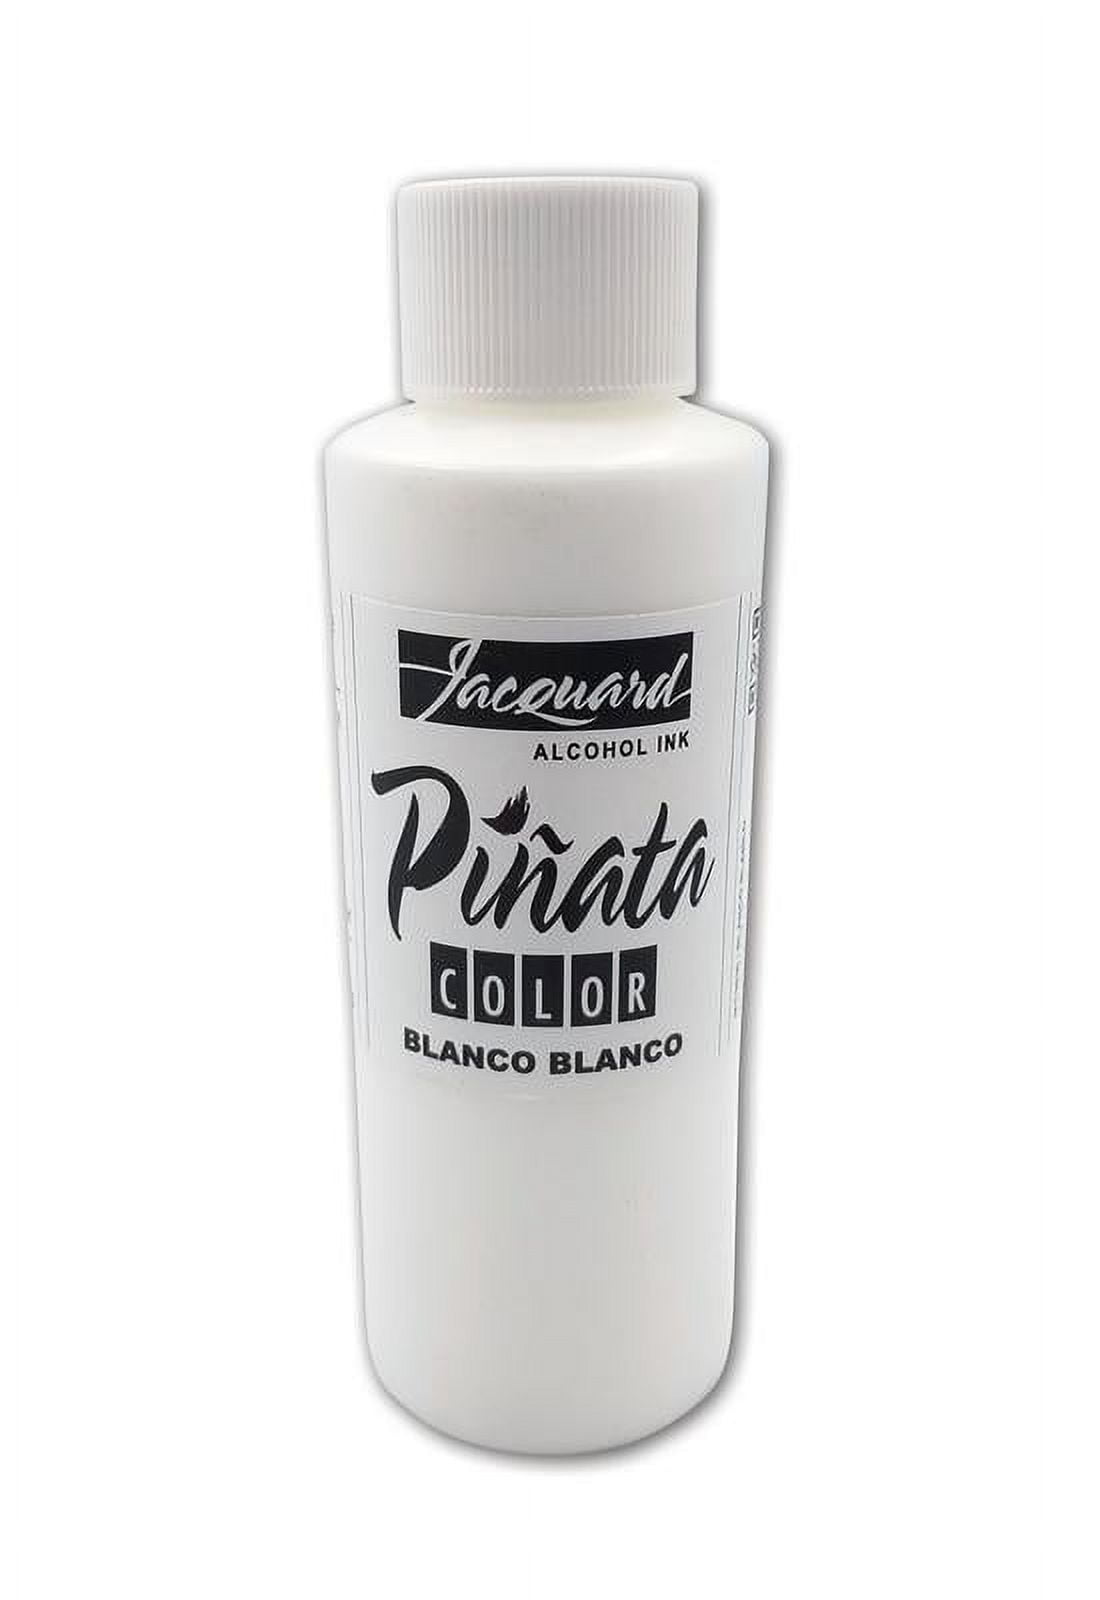 Jacquard Pinata Alcohol Ink - Blanco Blanco, 4oz